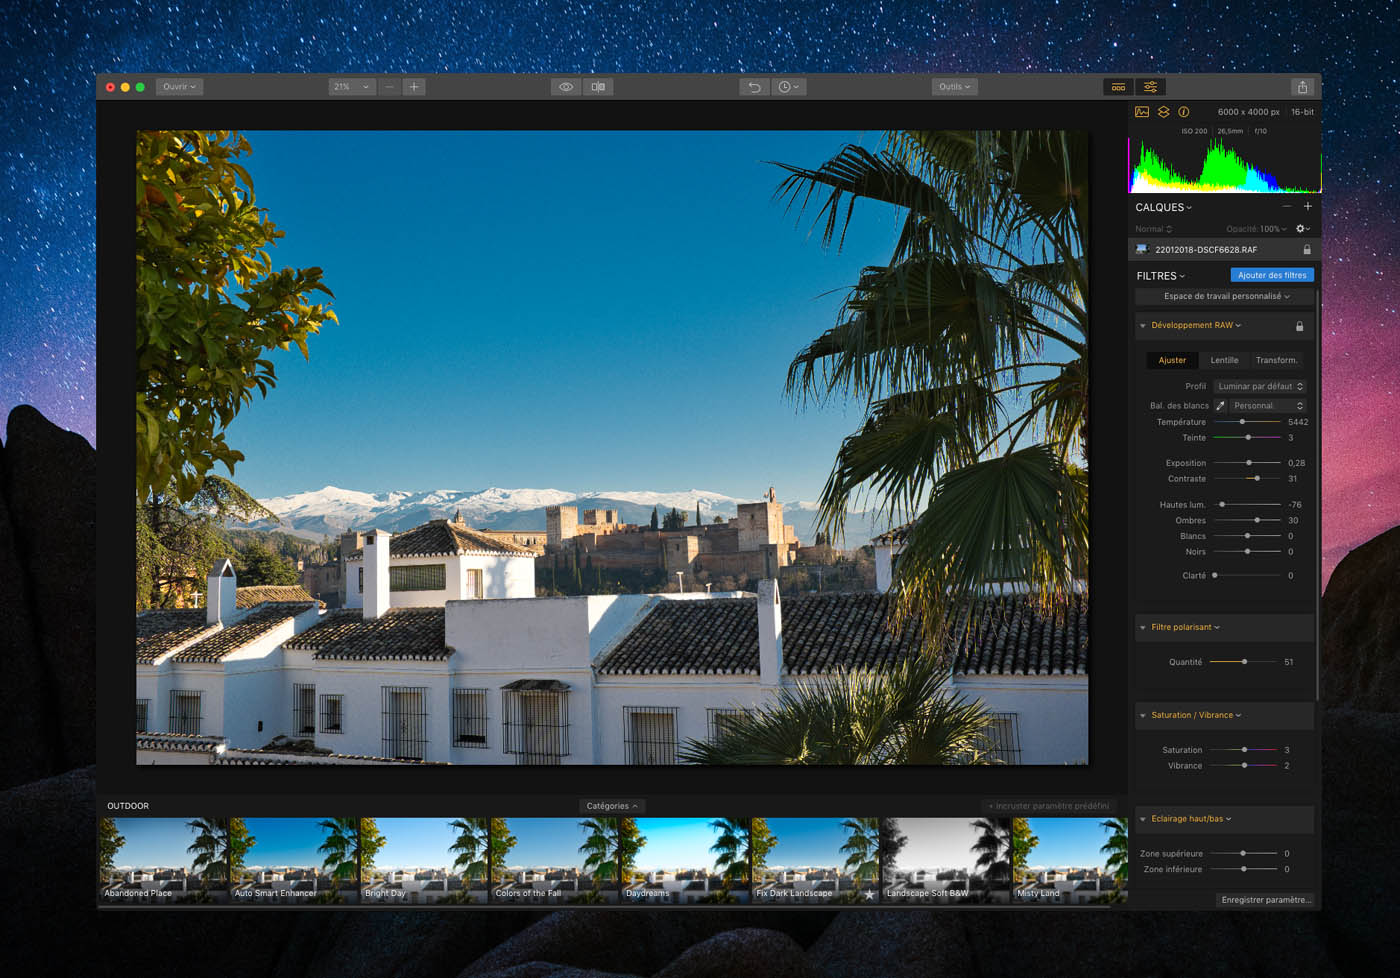 Luminar Neo 1.12.0.11756 for windows instal free